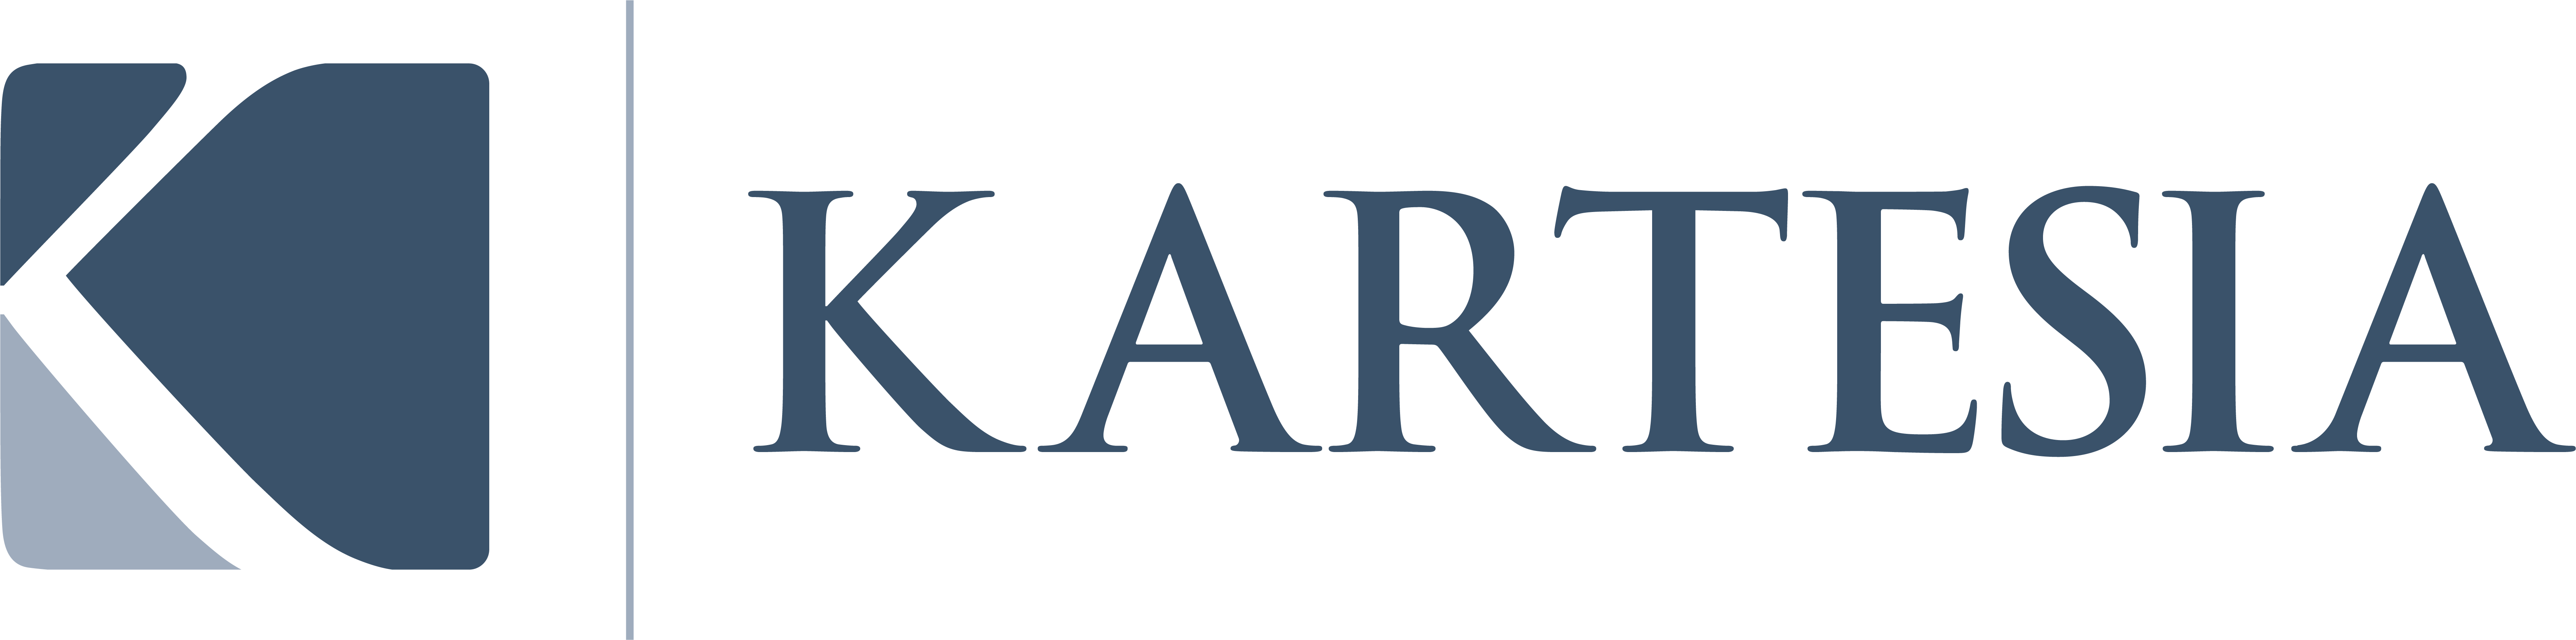 Kartesia logo